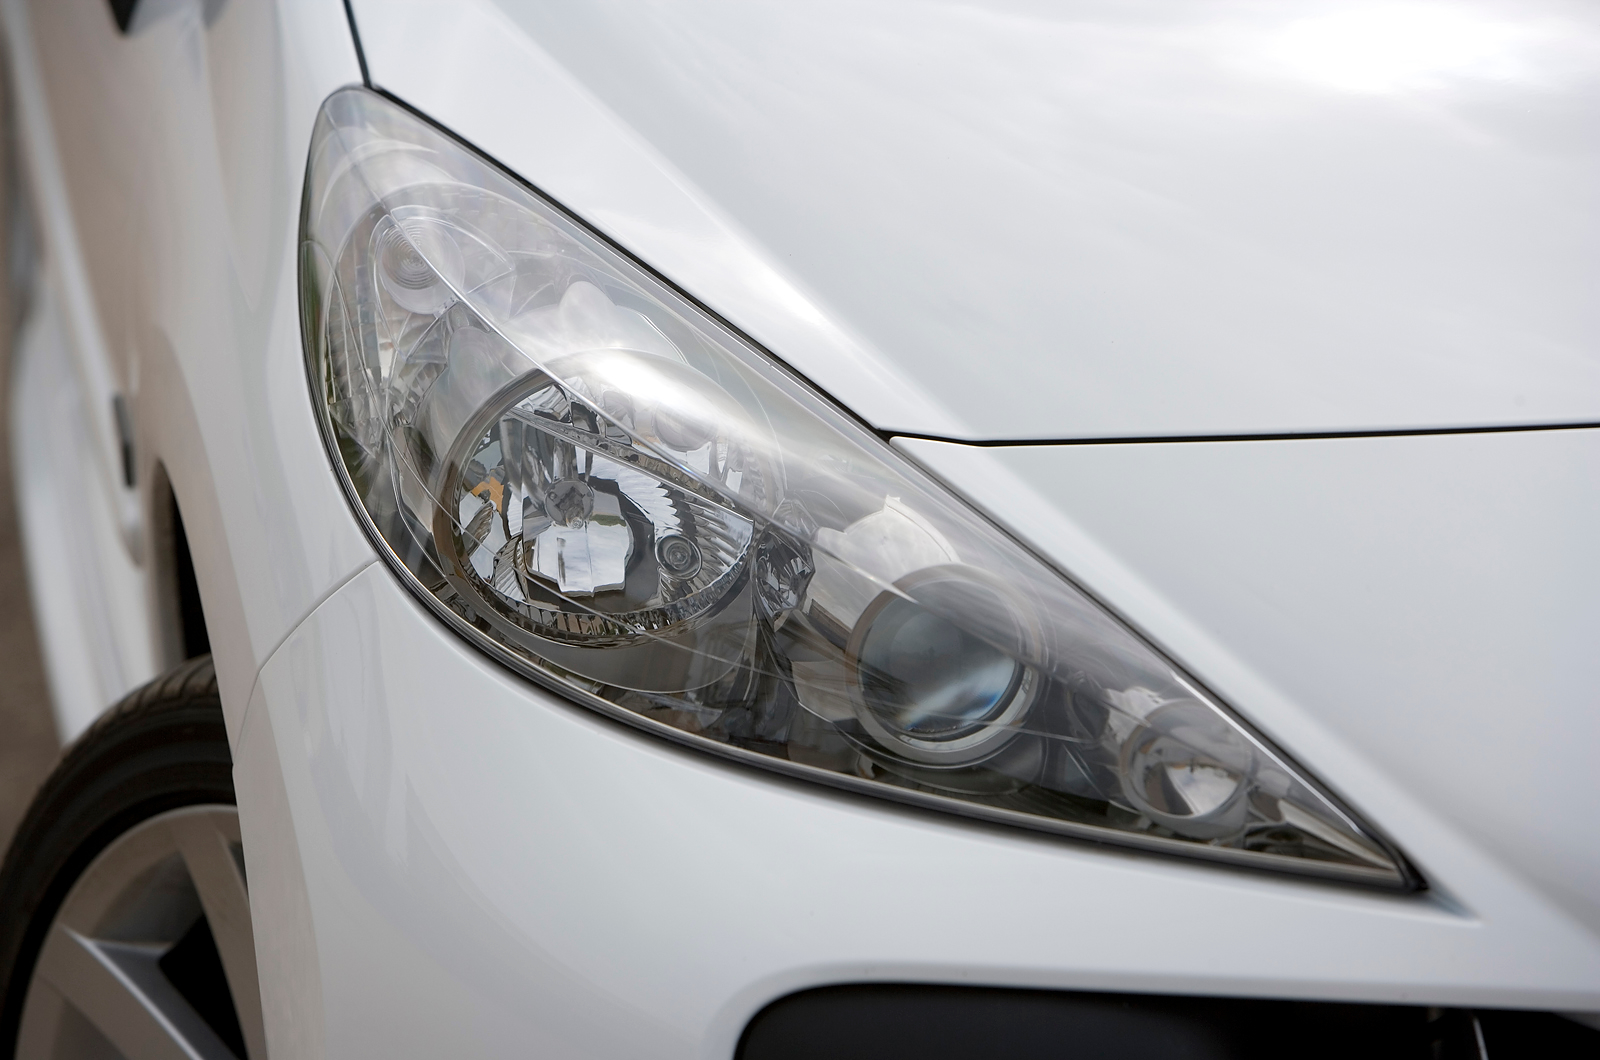 Peugeot 207 headlight